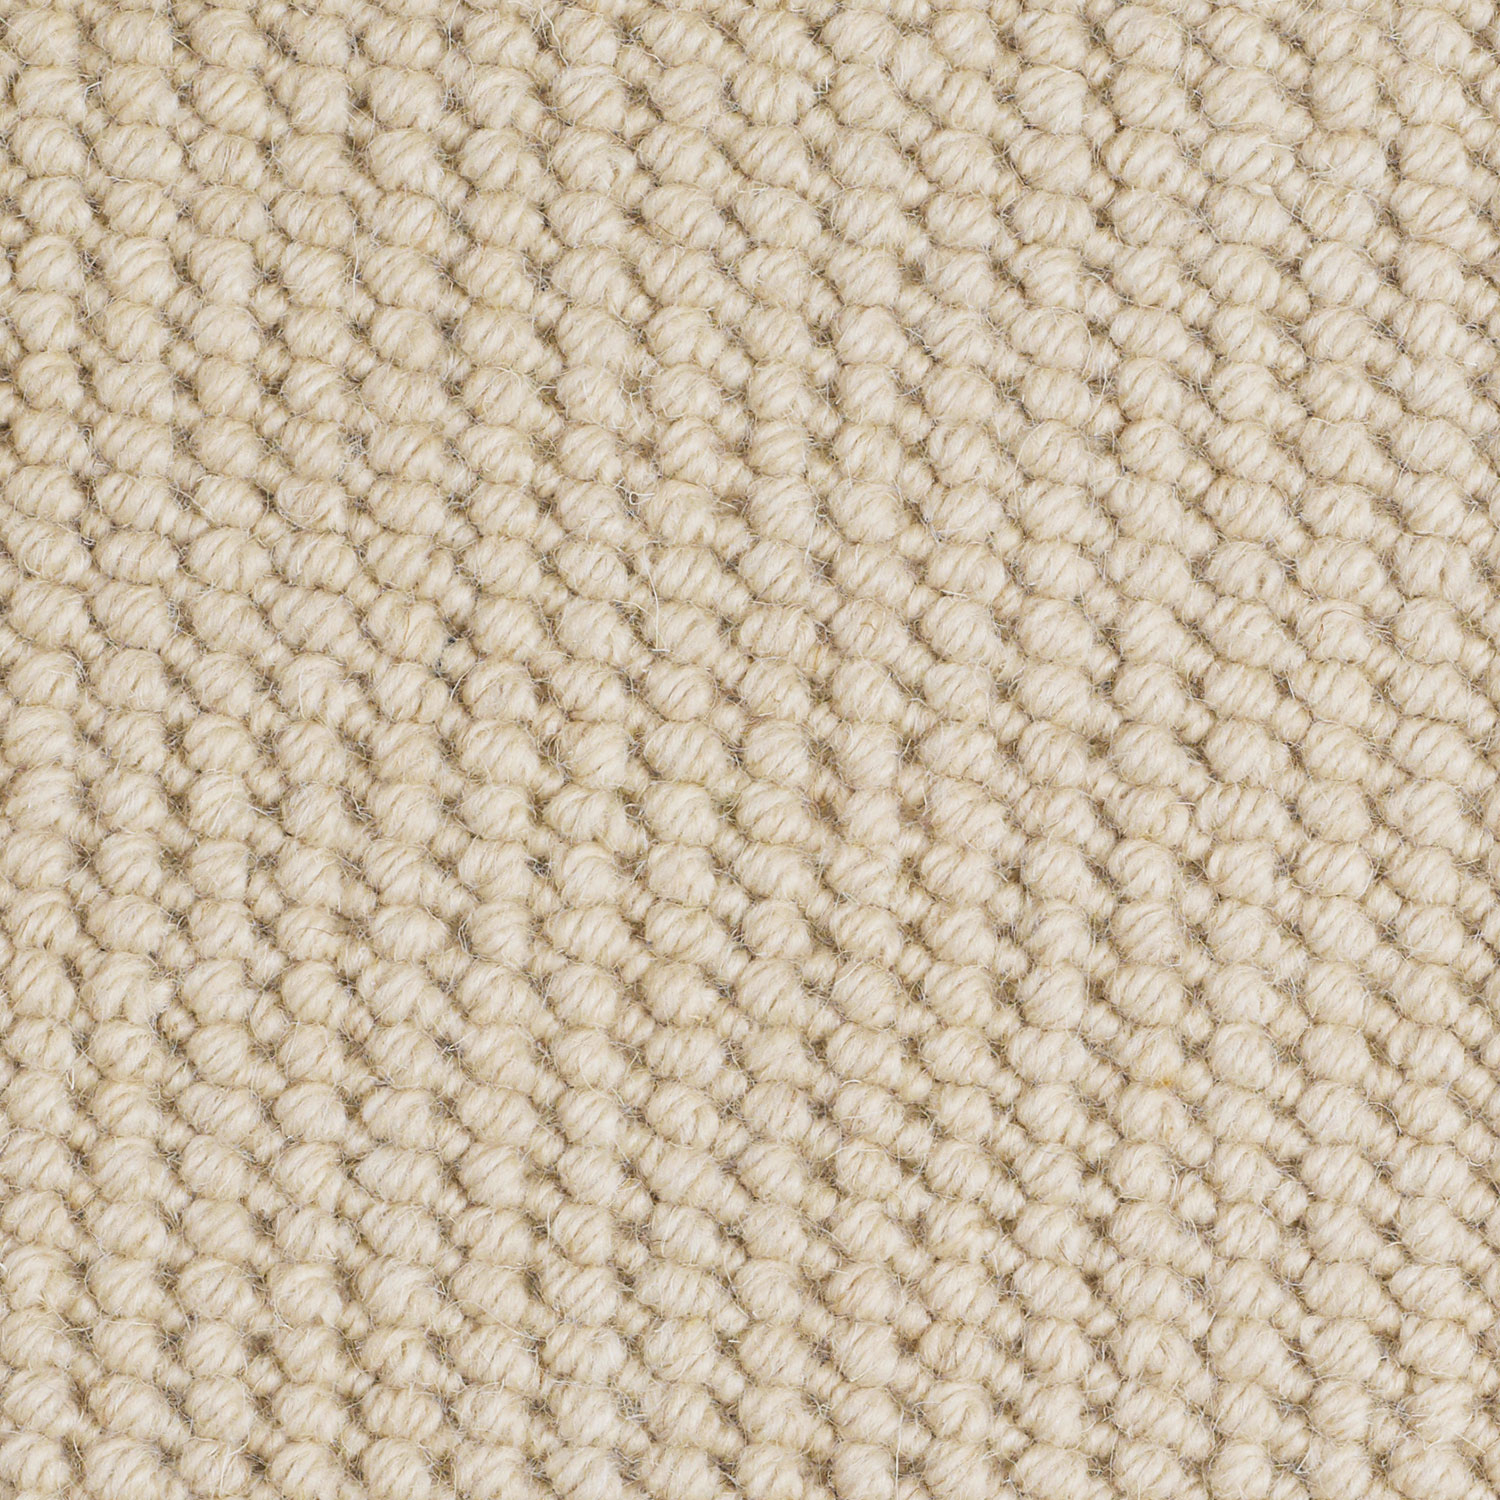 Mayfair: Champagne - 100% Wool Carpet